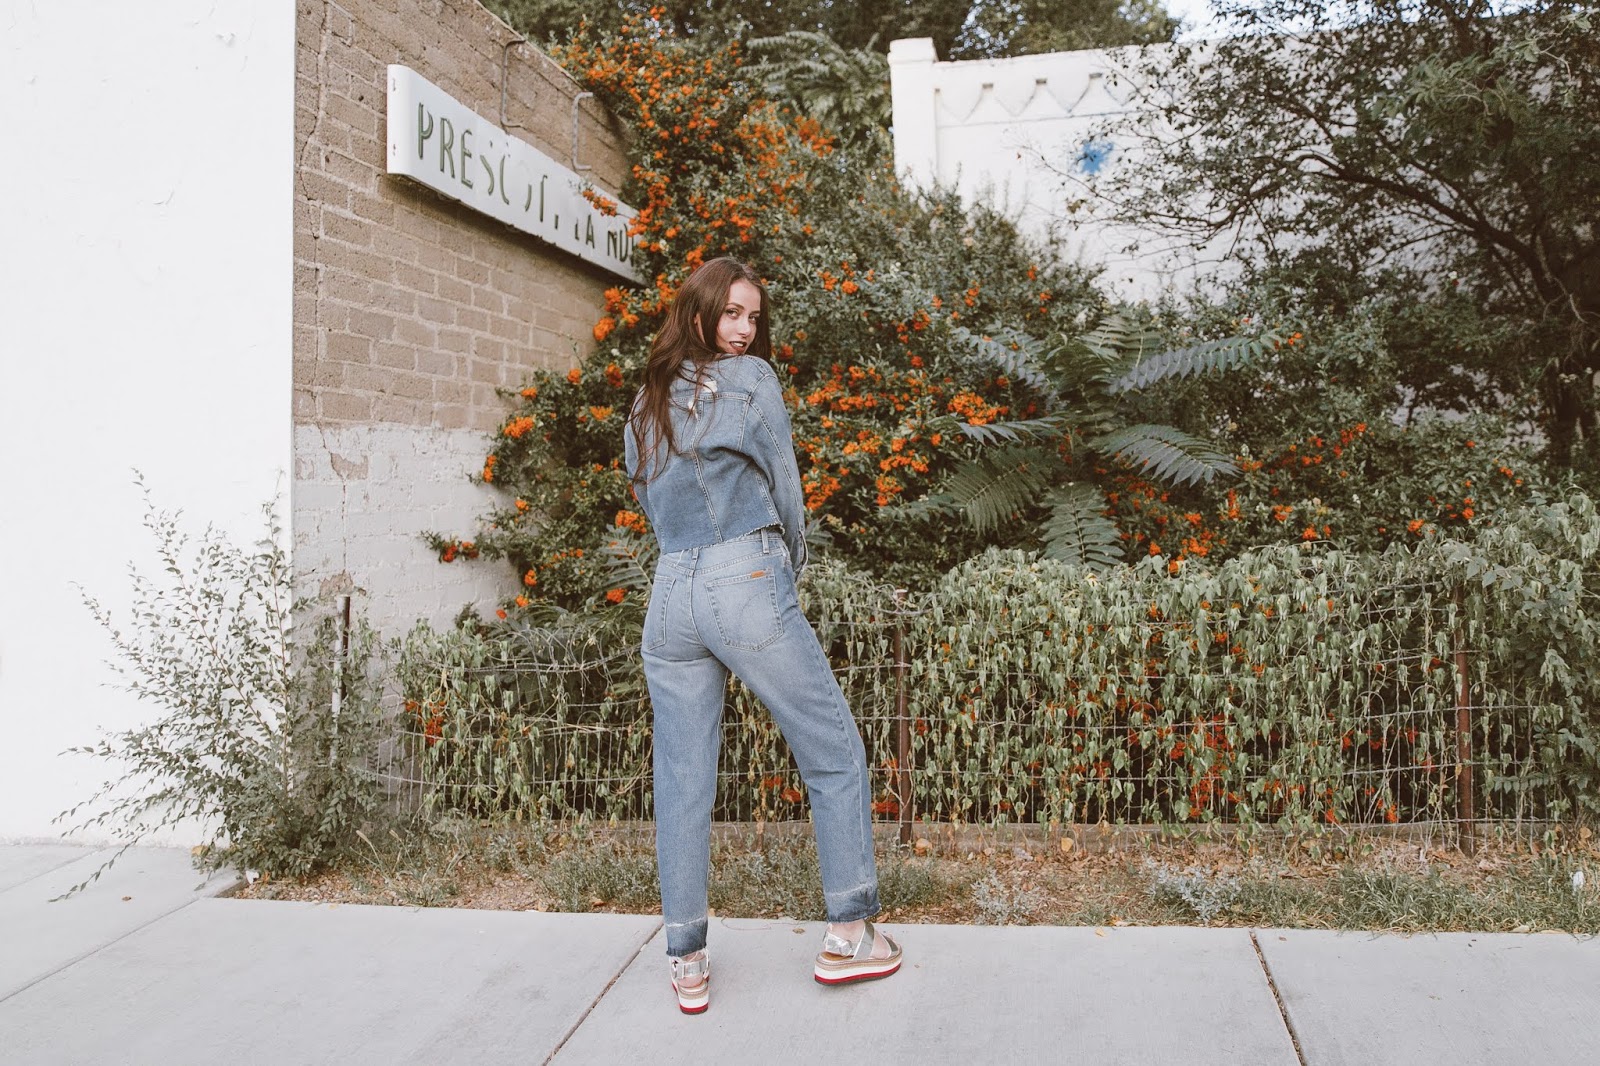 Arizona Girl fashion blog, Joe's Jeans, Stylinity, platform sandals, denim jacket, fall style 2018, Canadian tuxedo, Shelly Stuckman